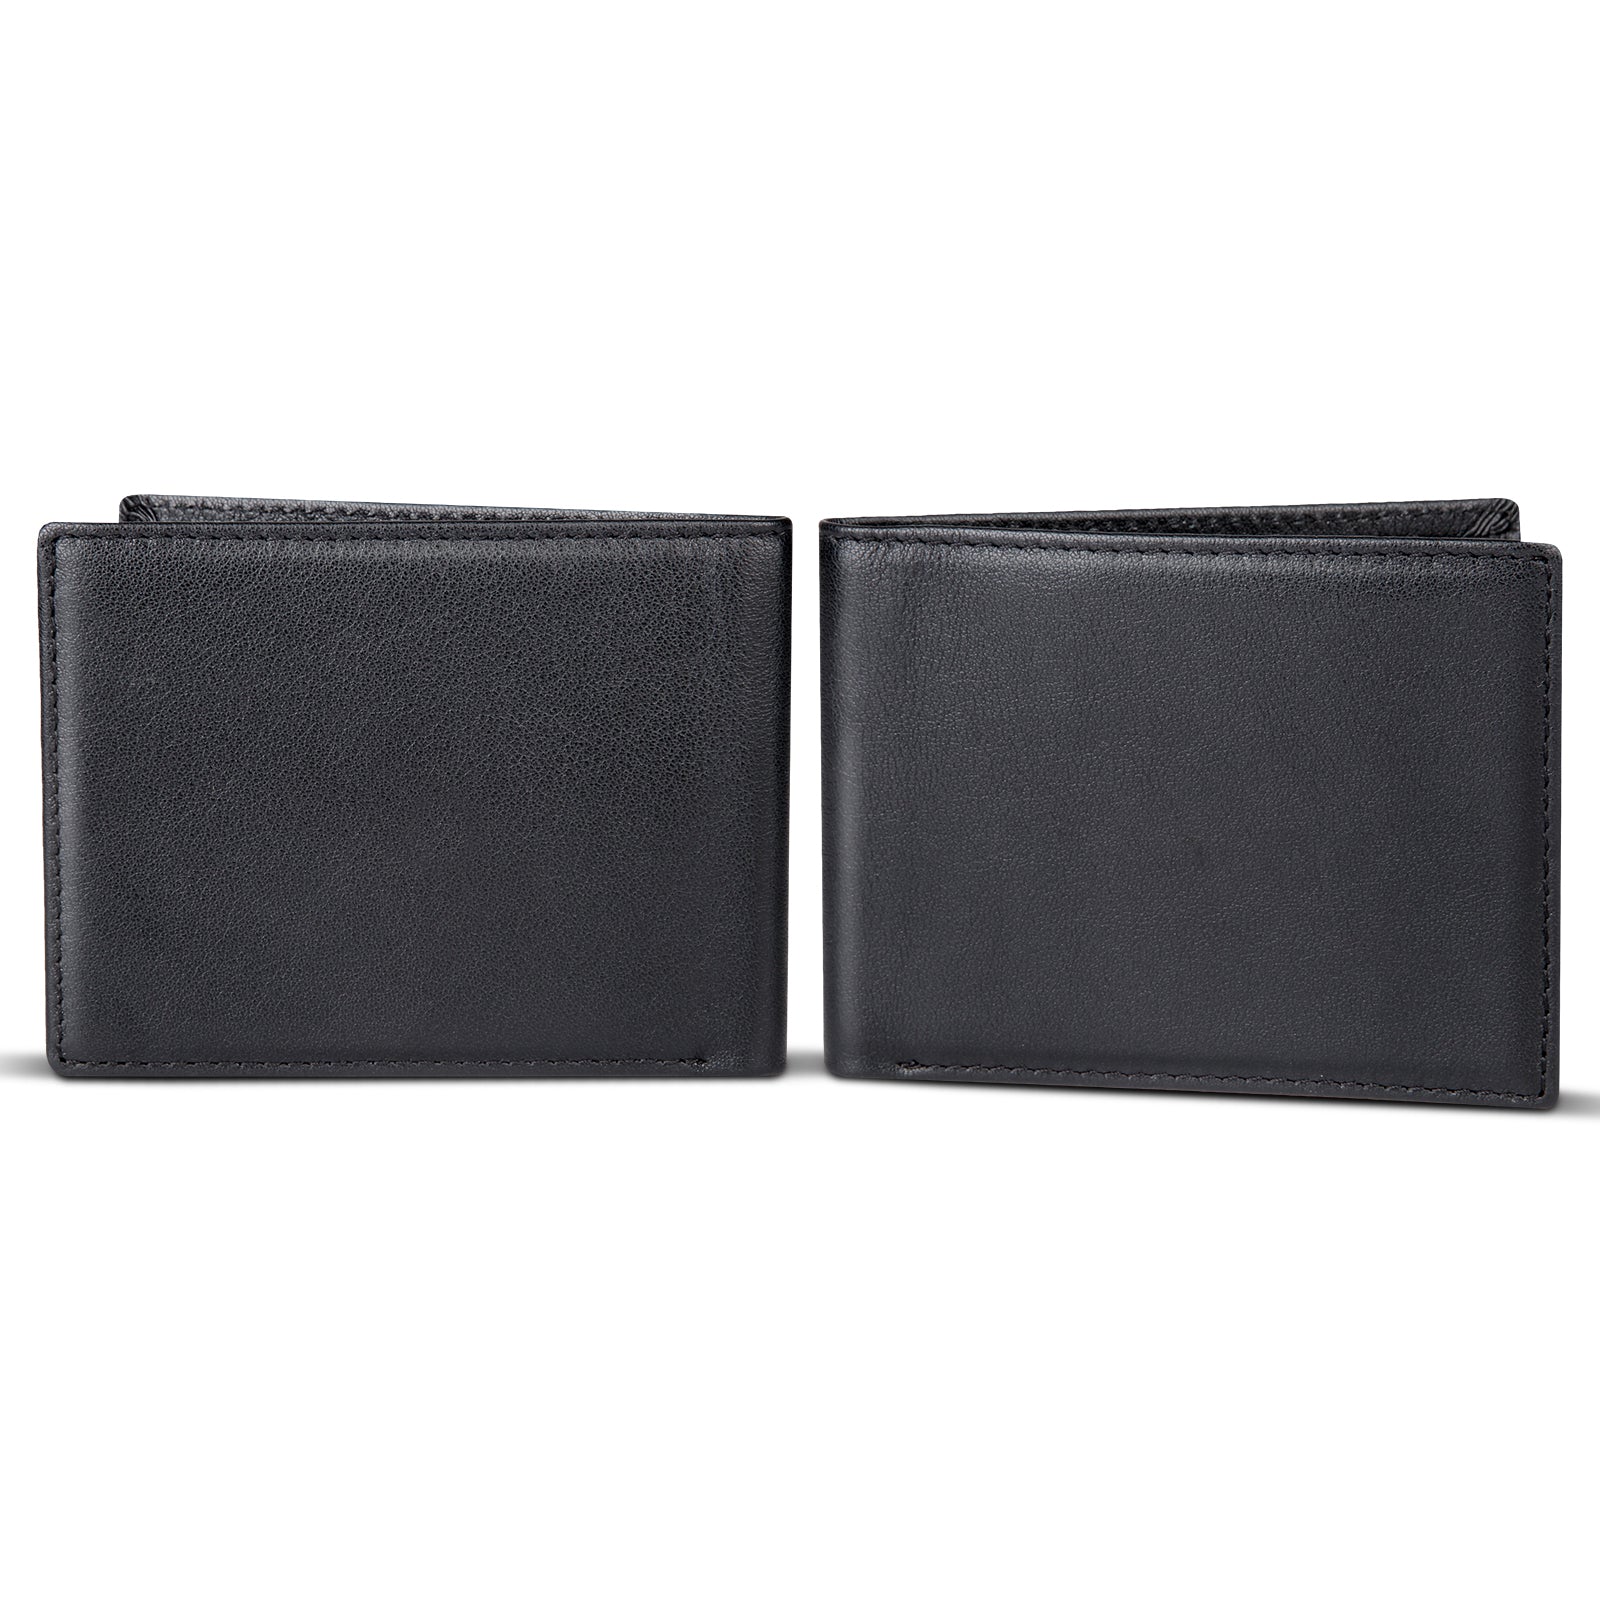 US $7.96 | 100% Genuine Leather Men Wallets Vintage Cowhide Zipper Coin  Purse Multifunction Business | Genuine leather wallets, Leather wallet mens,  Leather wallet